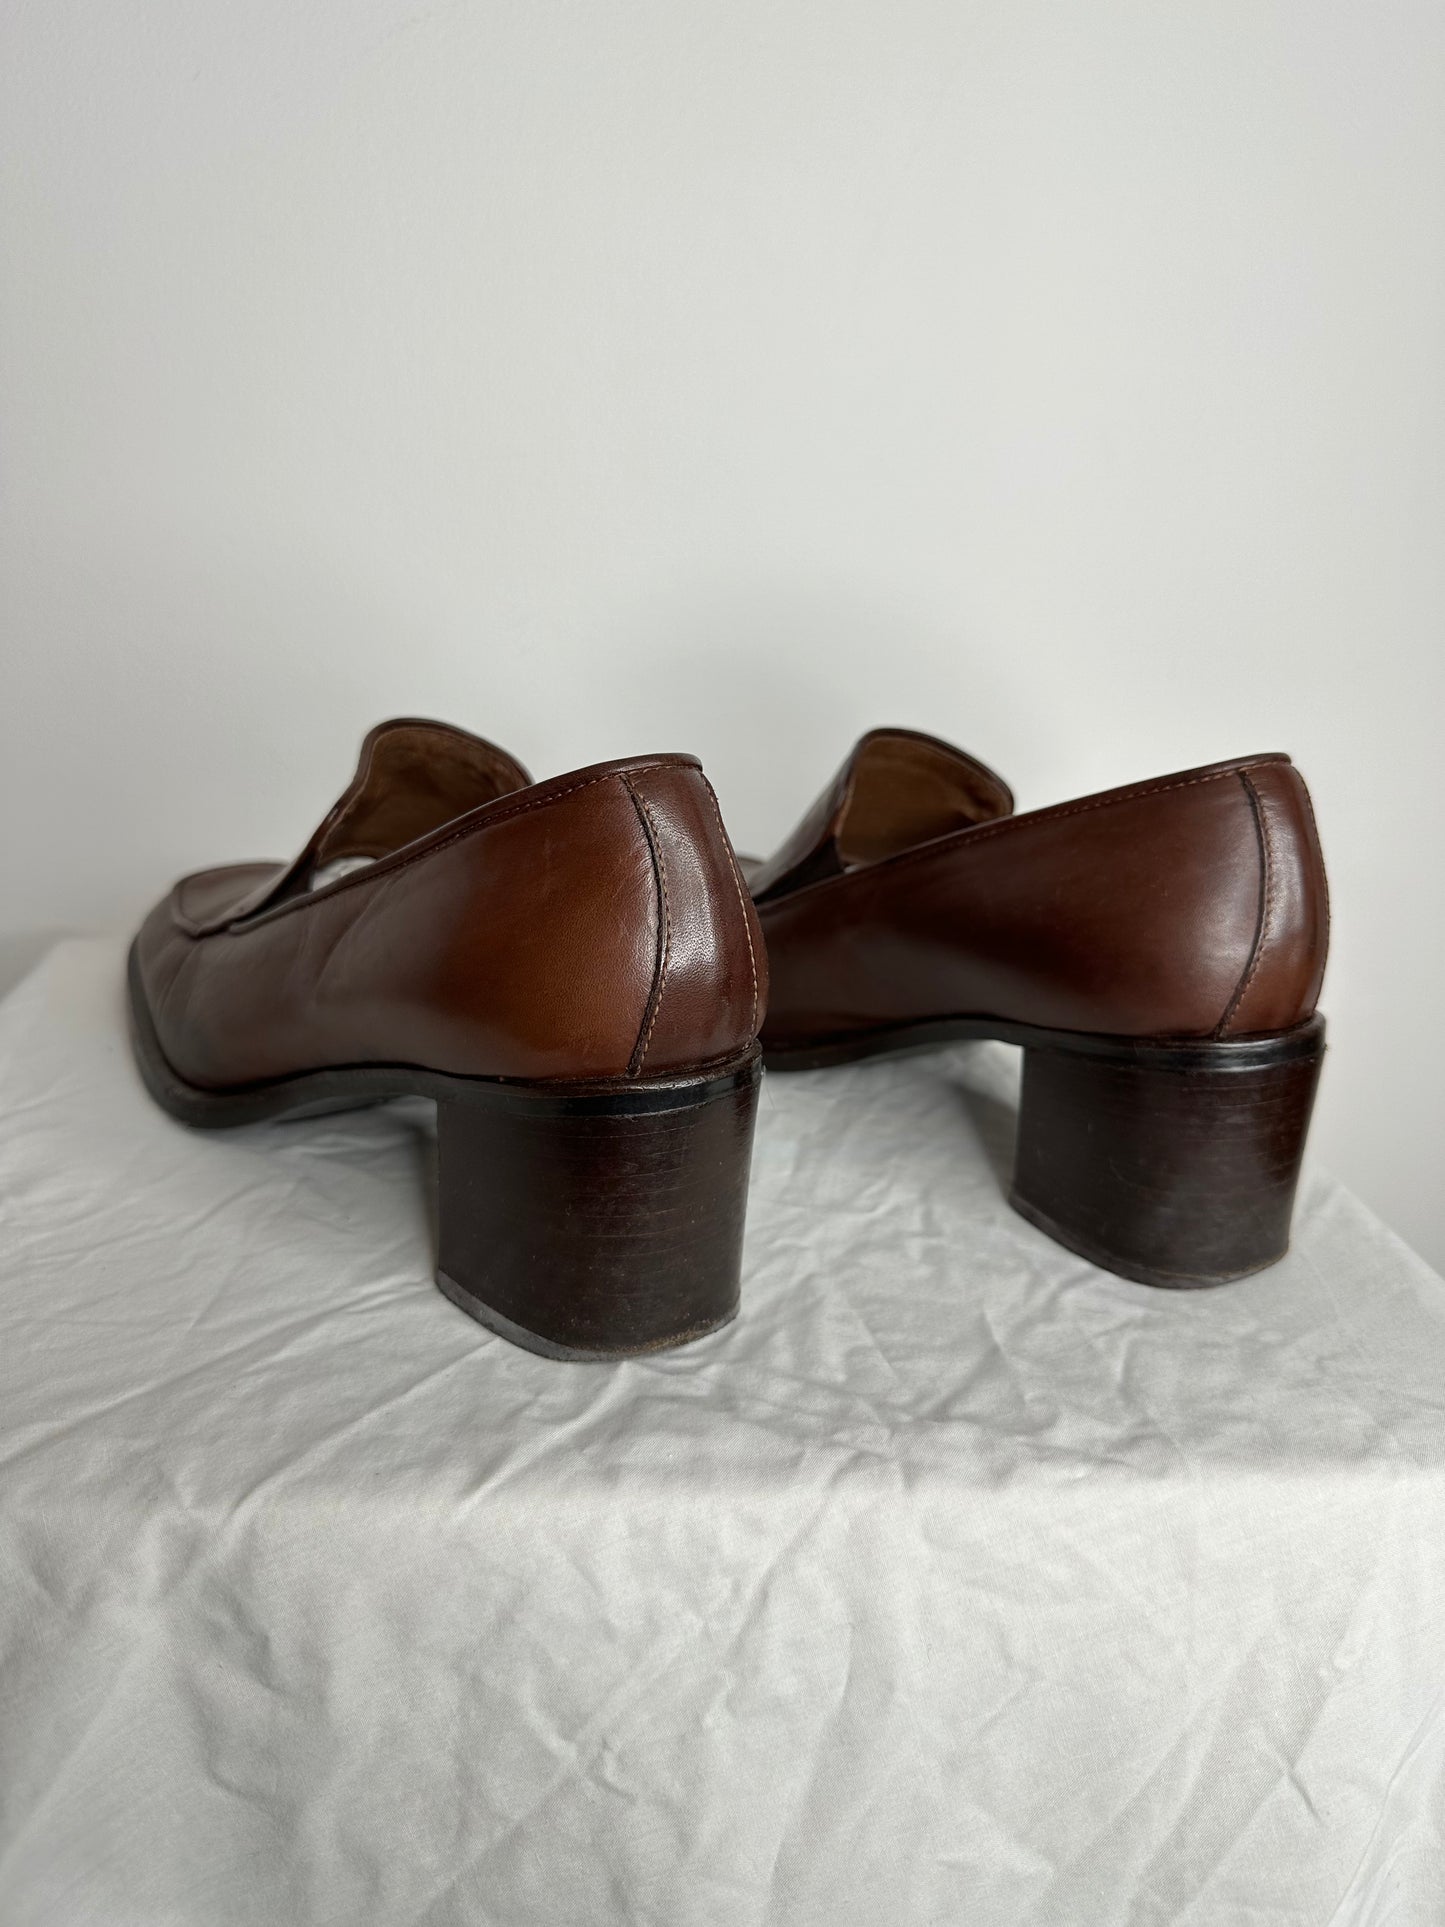 1990s Torretti Heeled Leather Loafers (US 8 / EU39)